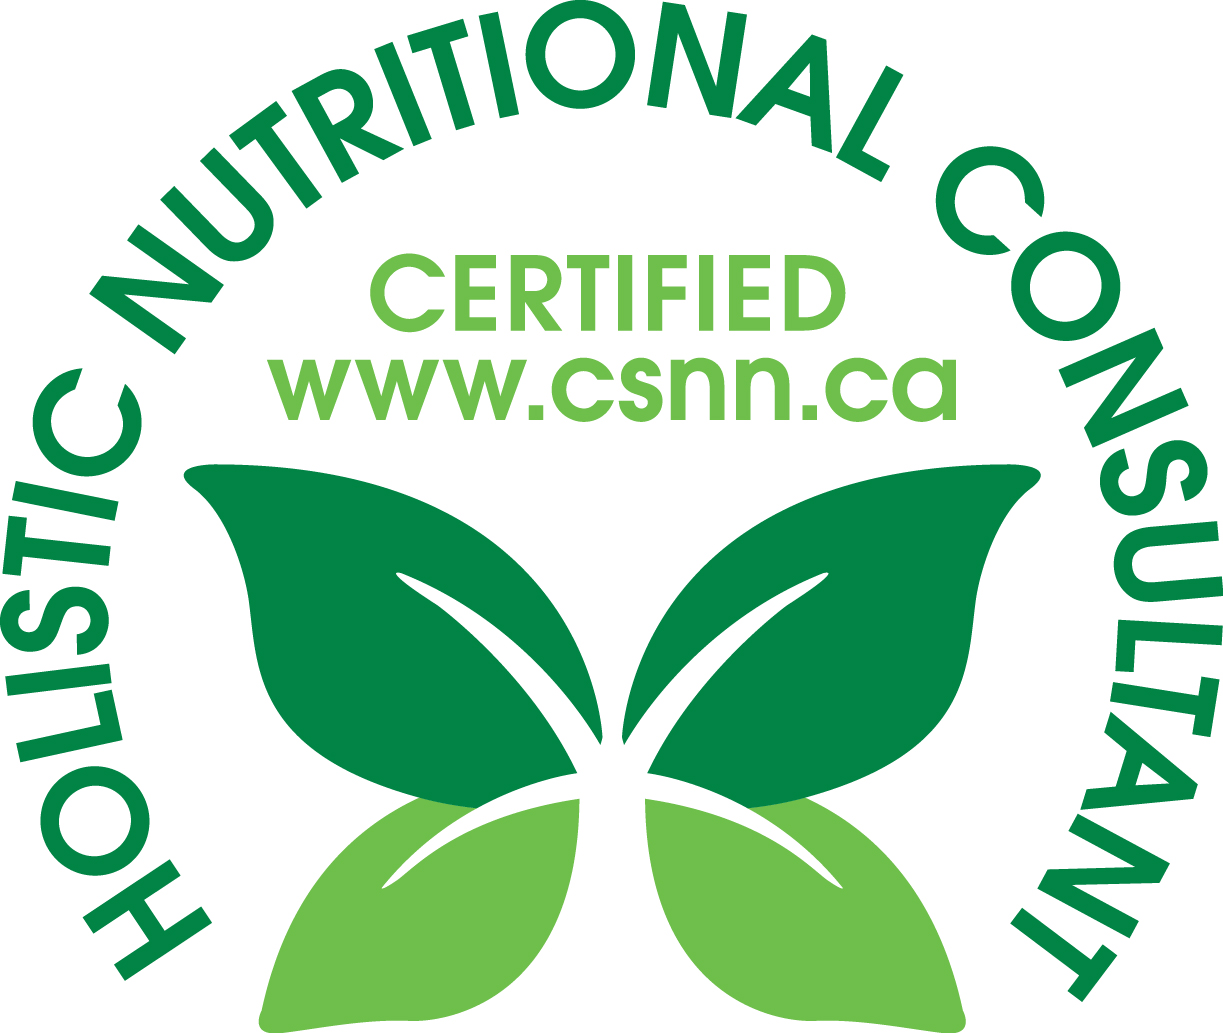 CSNN-Certification-Mark-LG